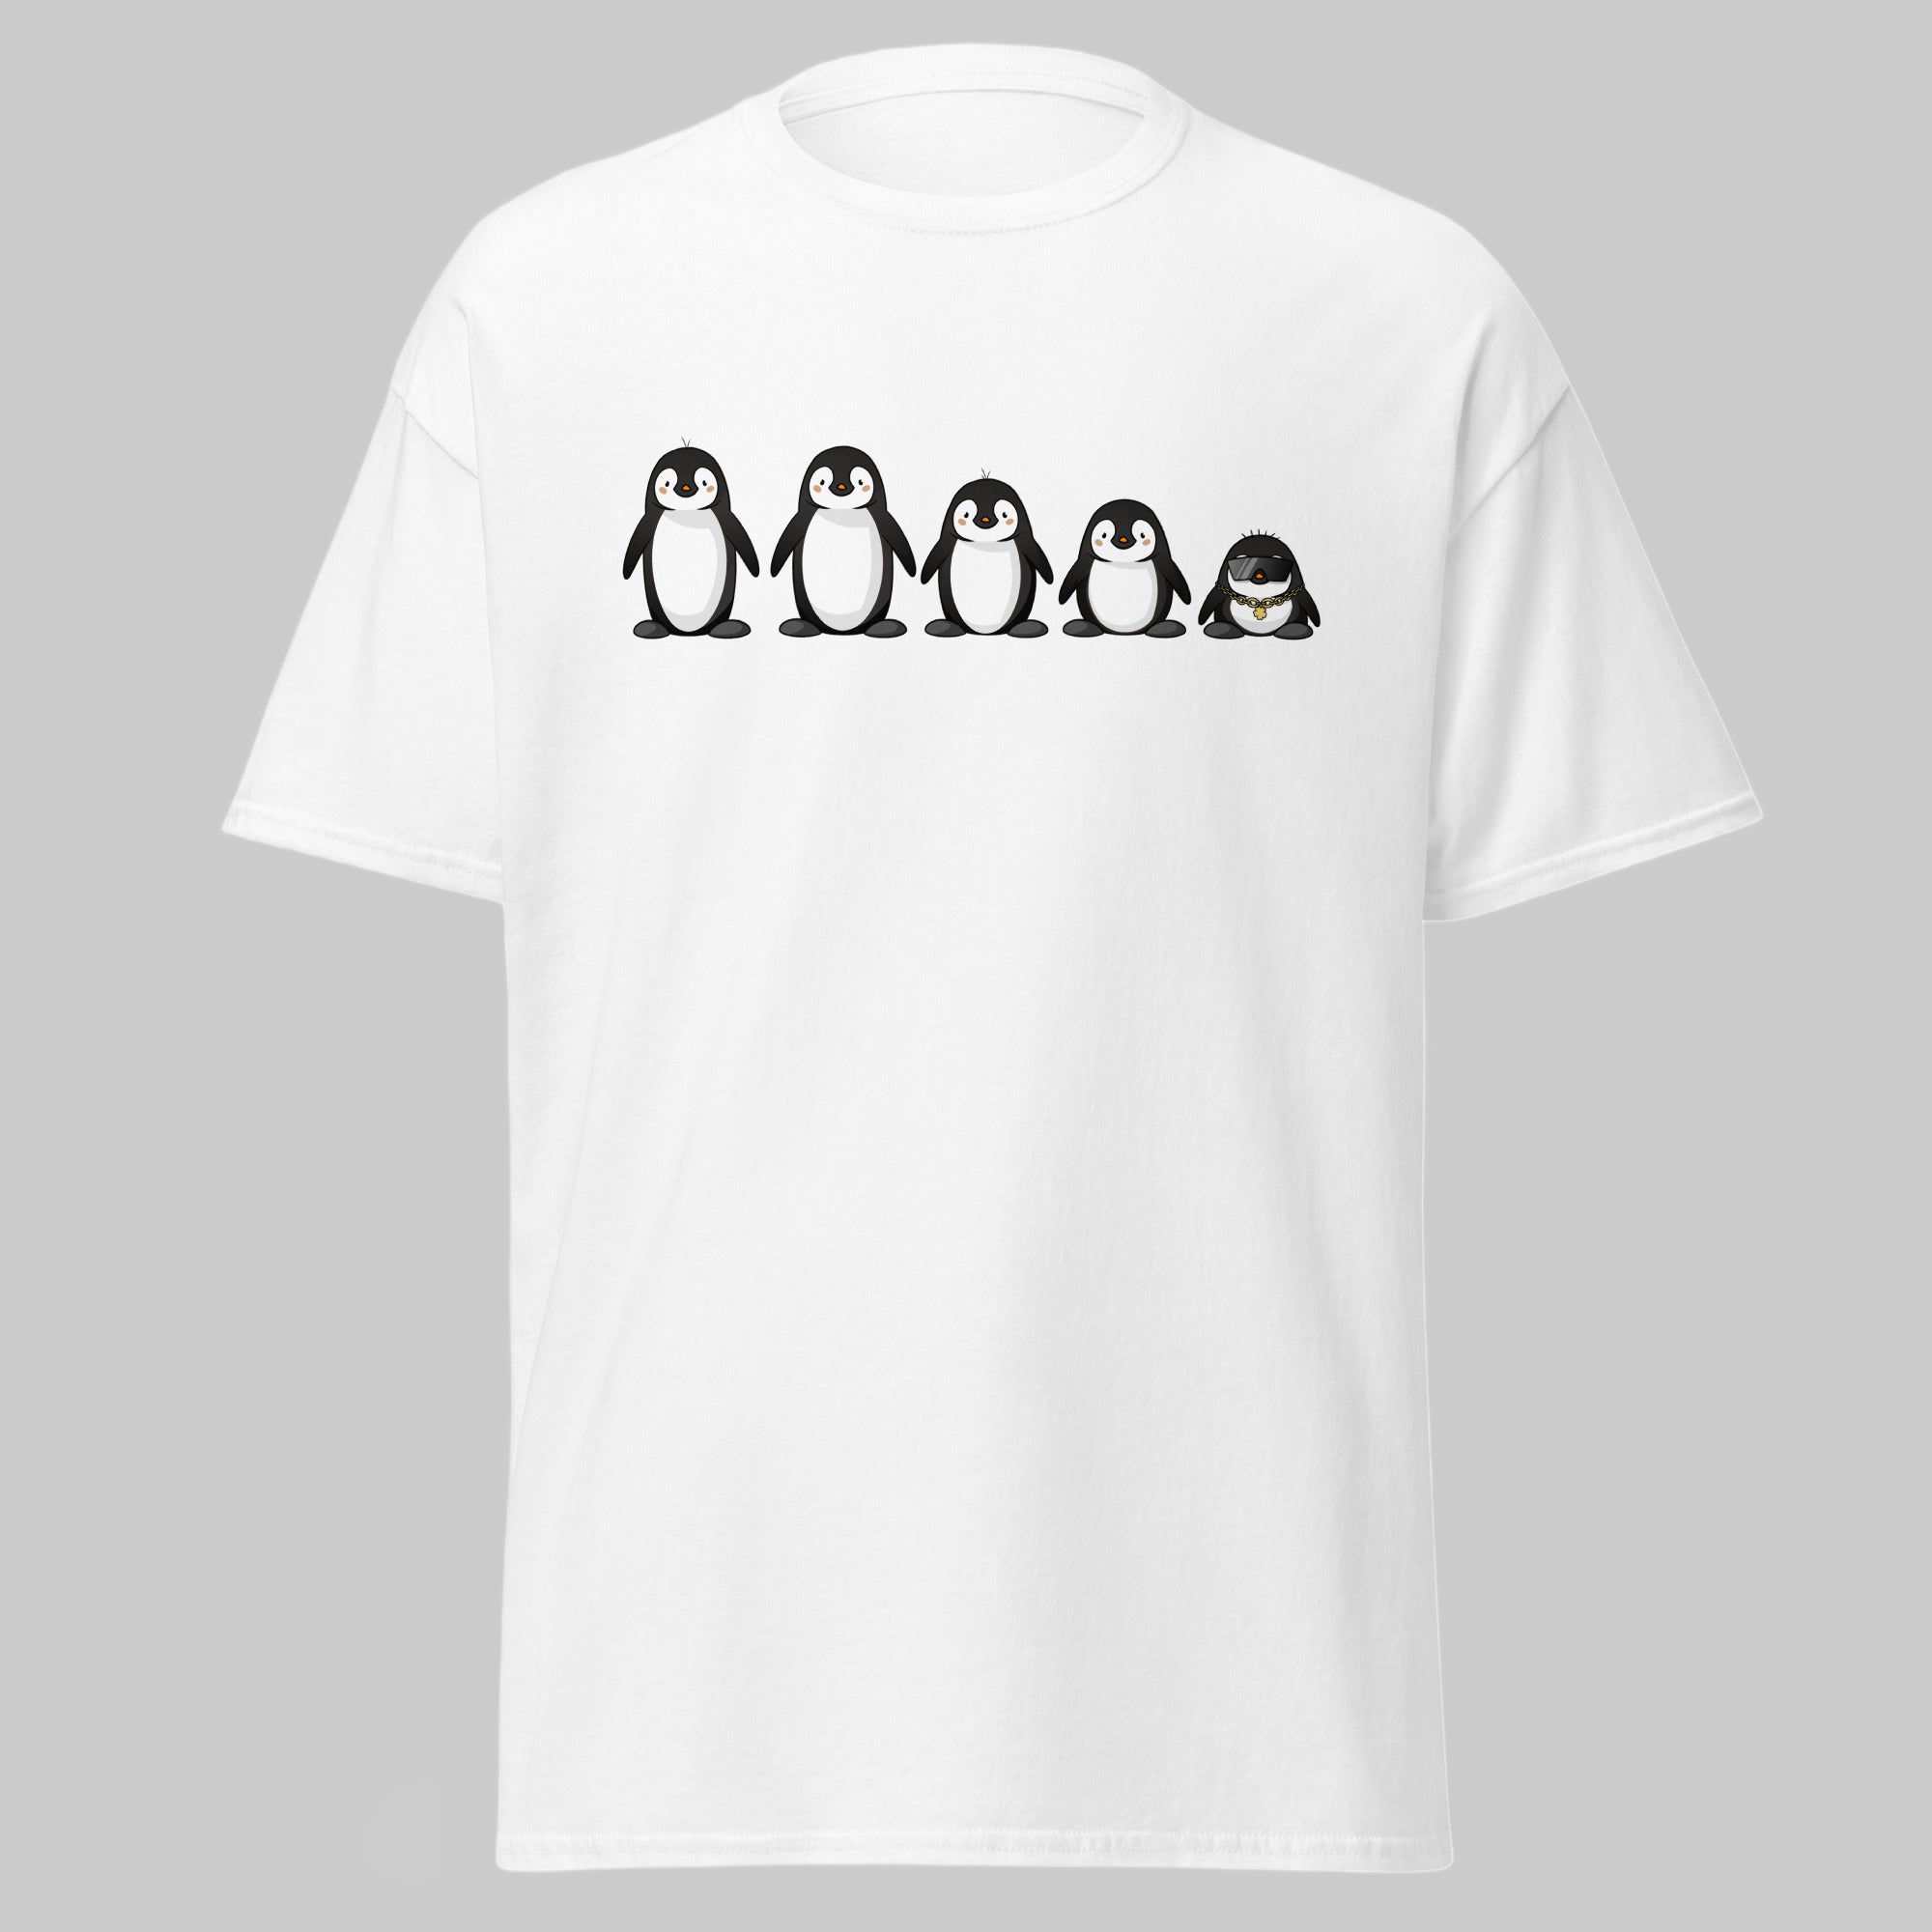 Penguins:  T-Shirt